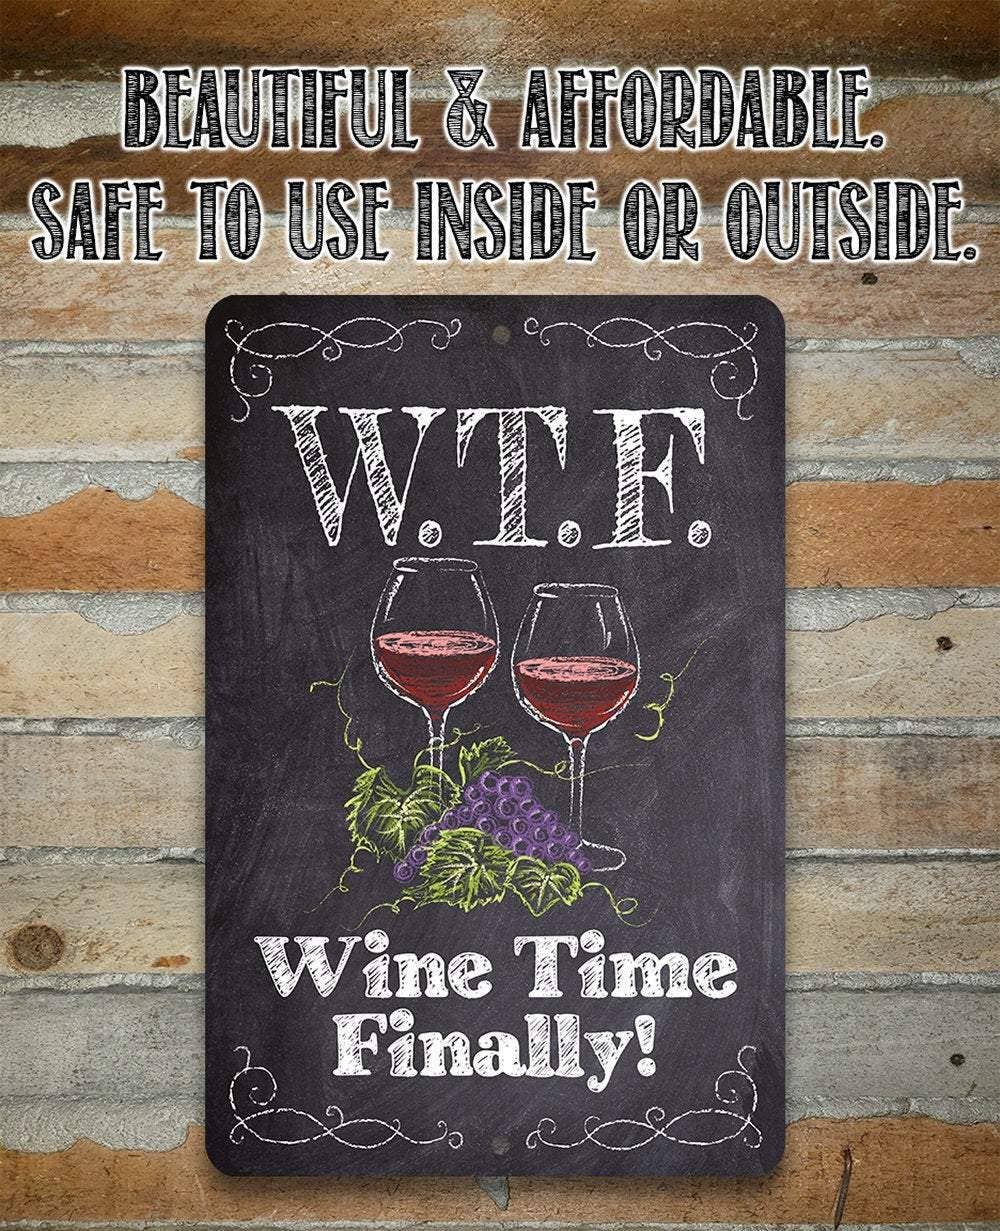 WTF Wine Time Finally (Chalkboard Style) - Metal Sign: 8 x 12